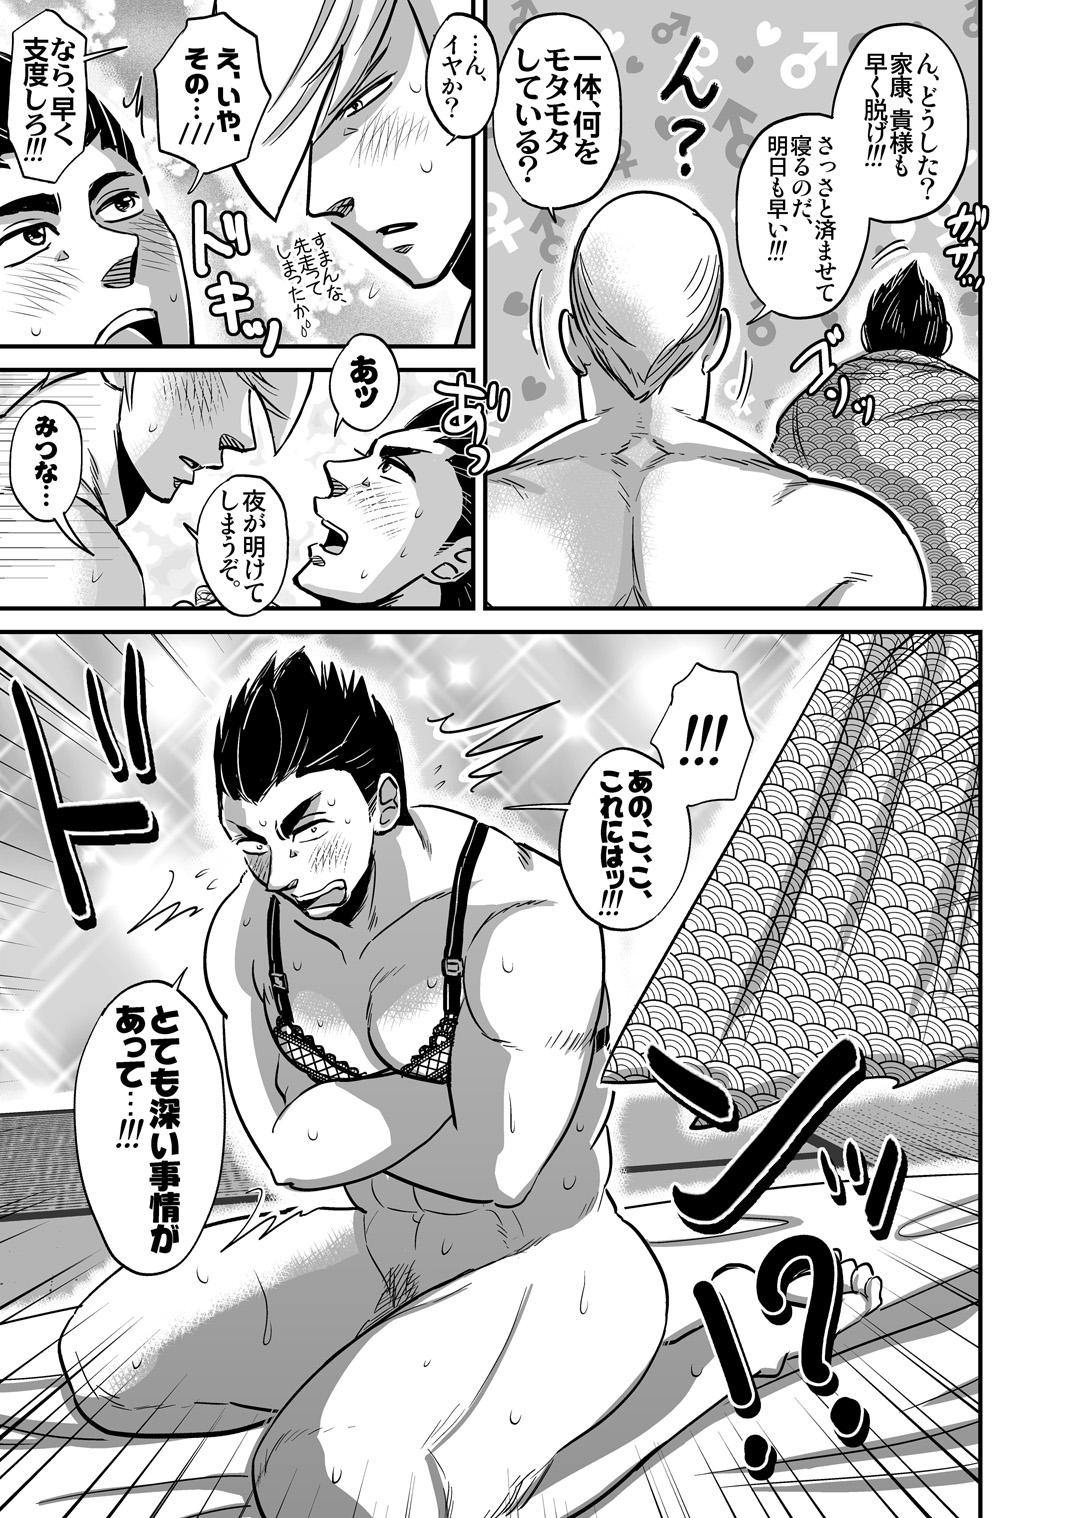 Oldman Multi-HOMO manga at home - Sengoku basara Slapping - Page 6